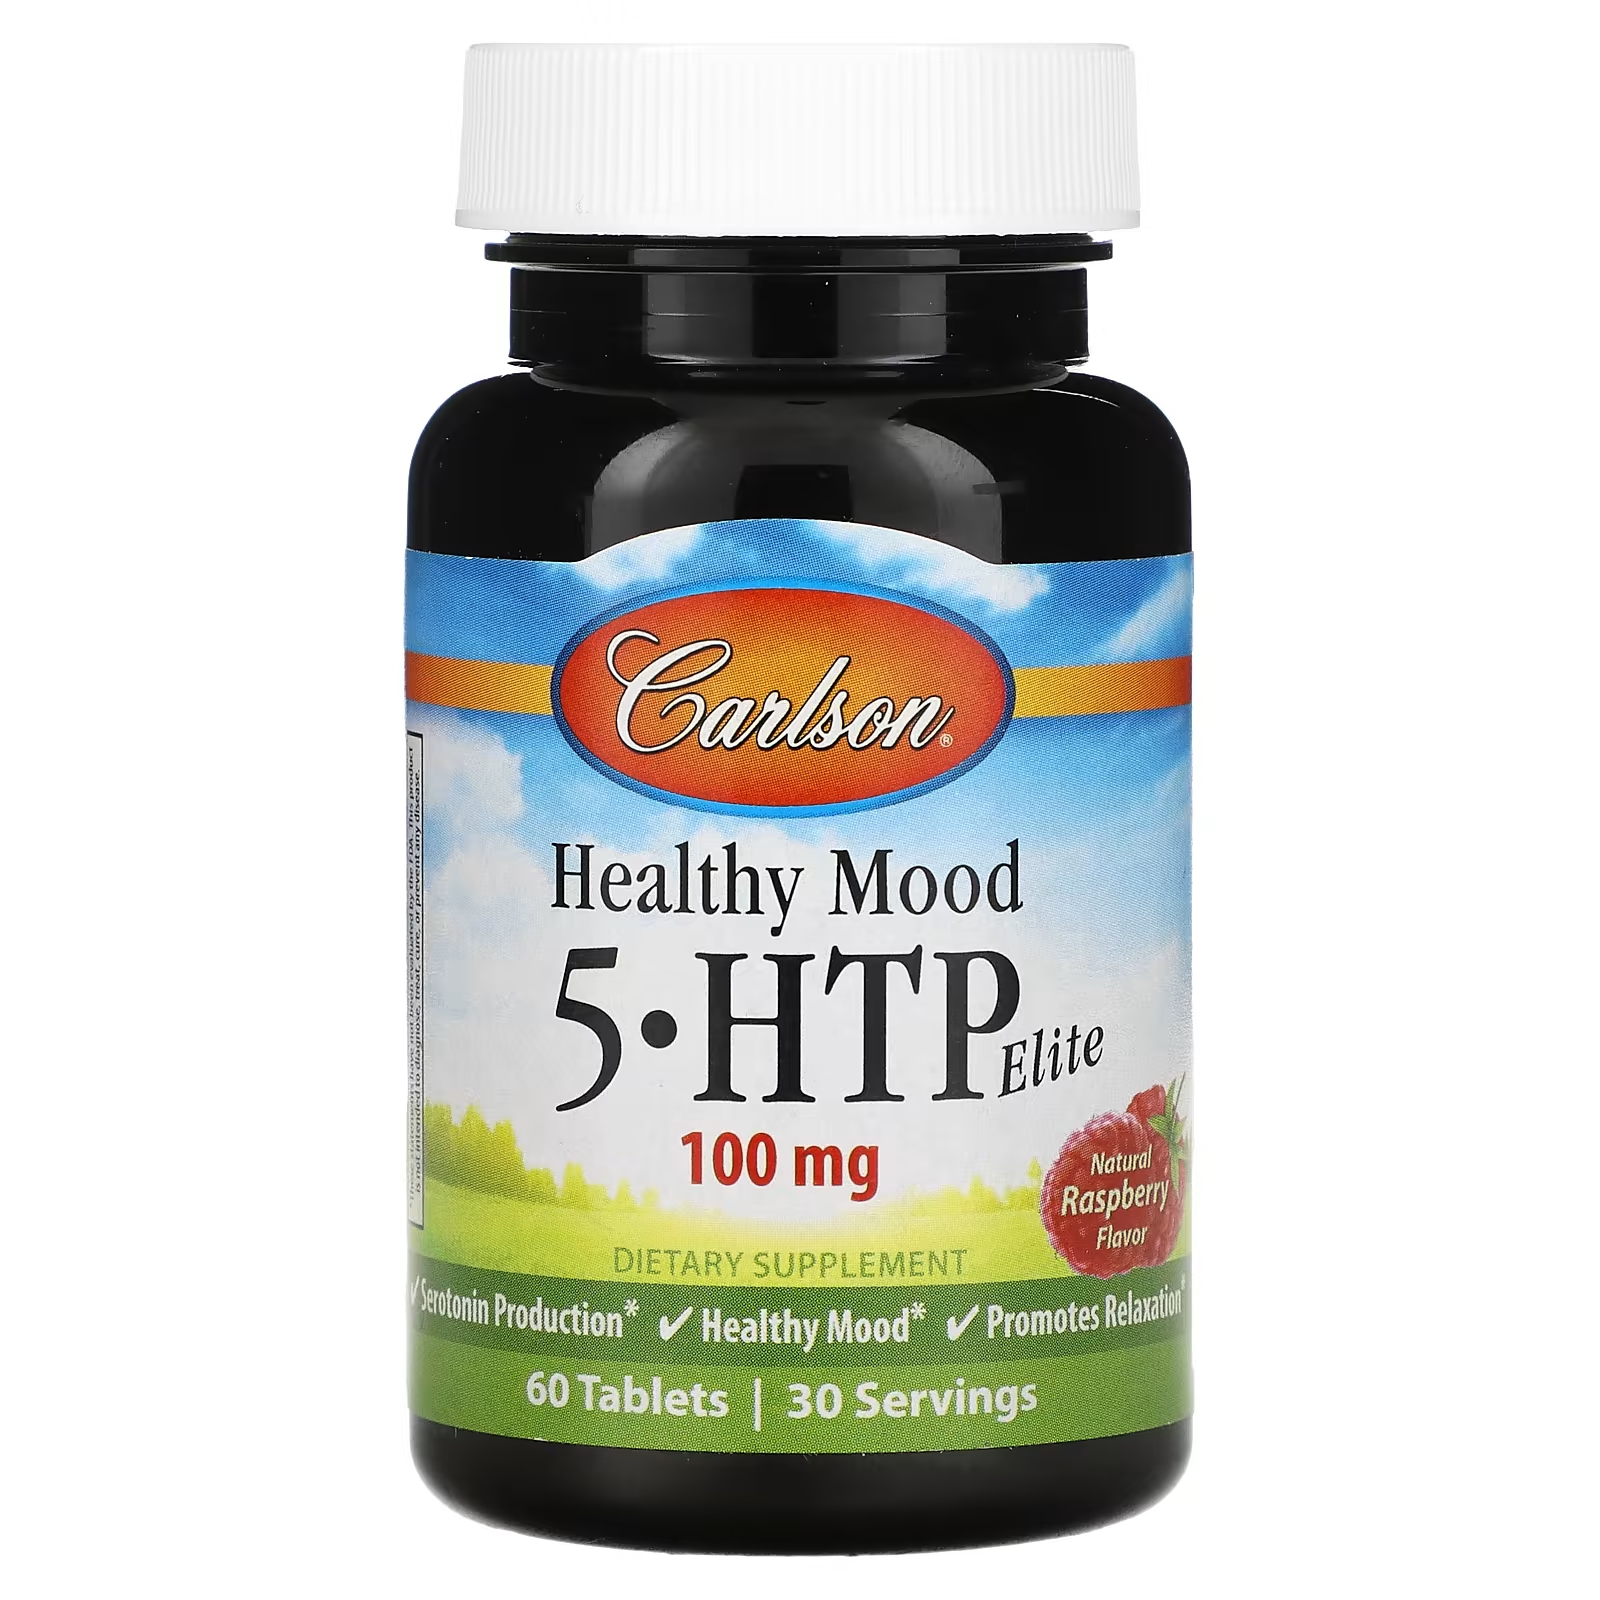 Пищевая добавка Carlson Healthy Mood 5-HTP Elite Natural Raspberry 100 мг, 60 таблеток (50 мг на таблетку) цена и фото